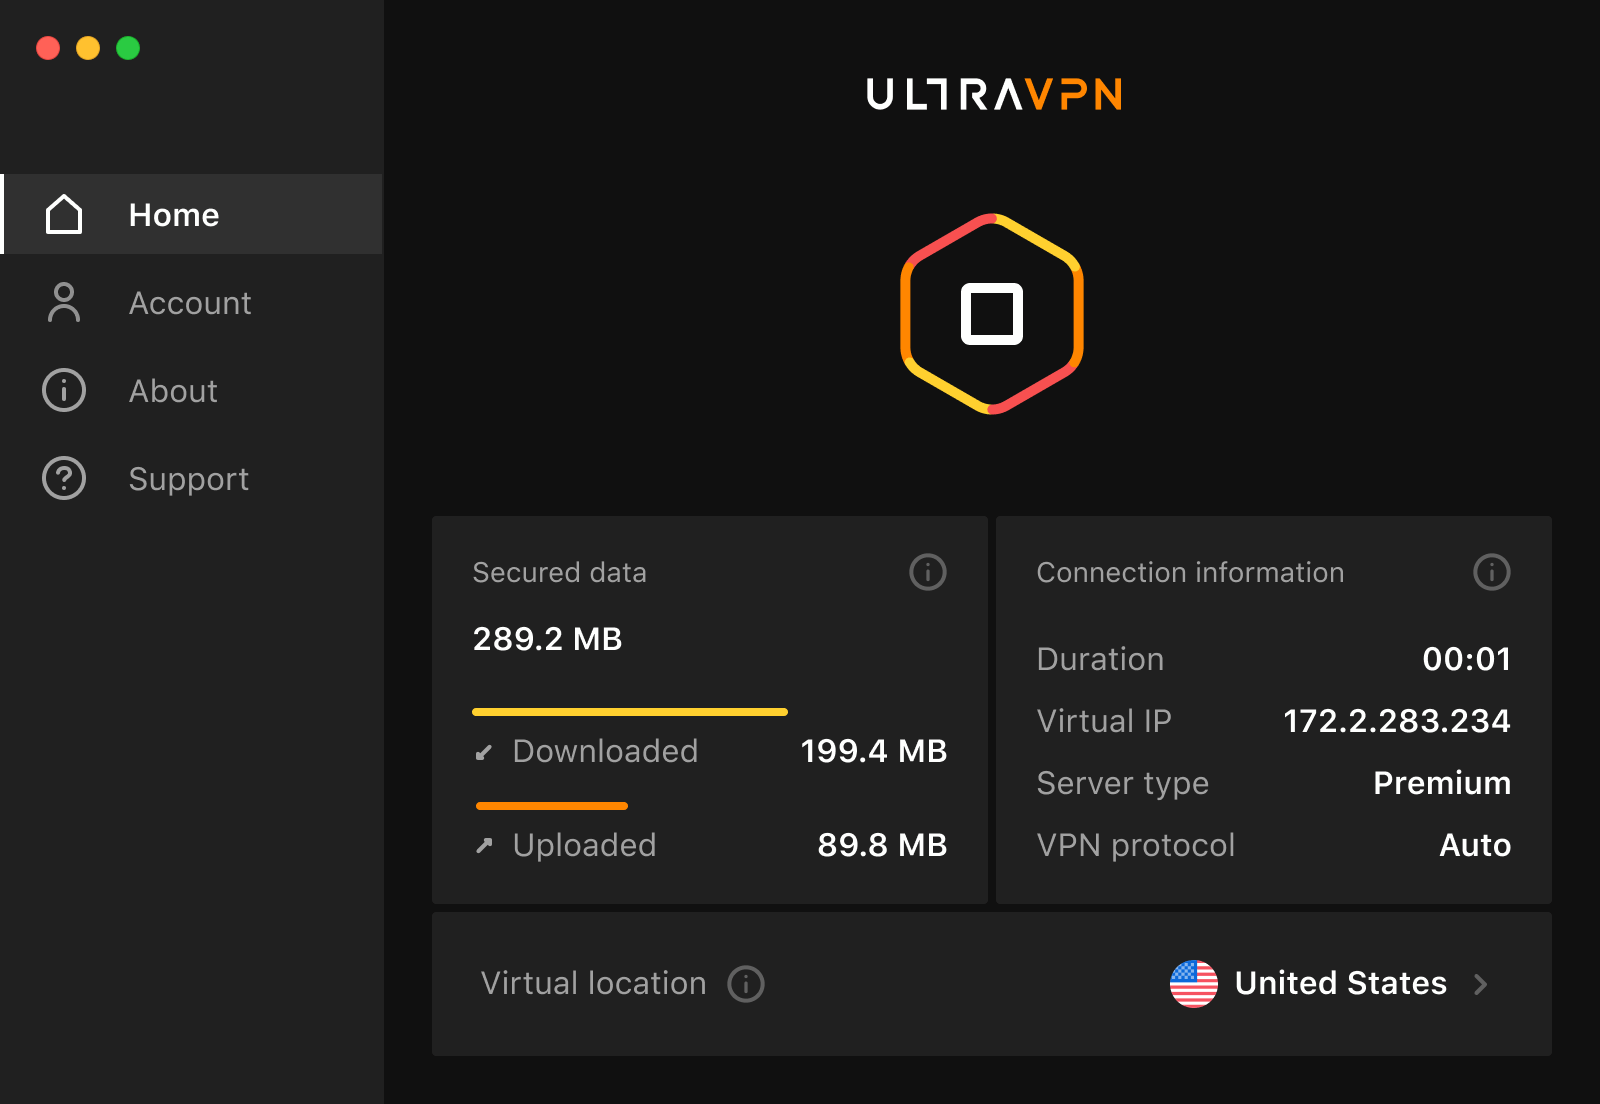 Is UltraVPN a legitimate company?